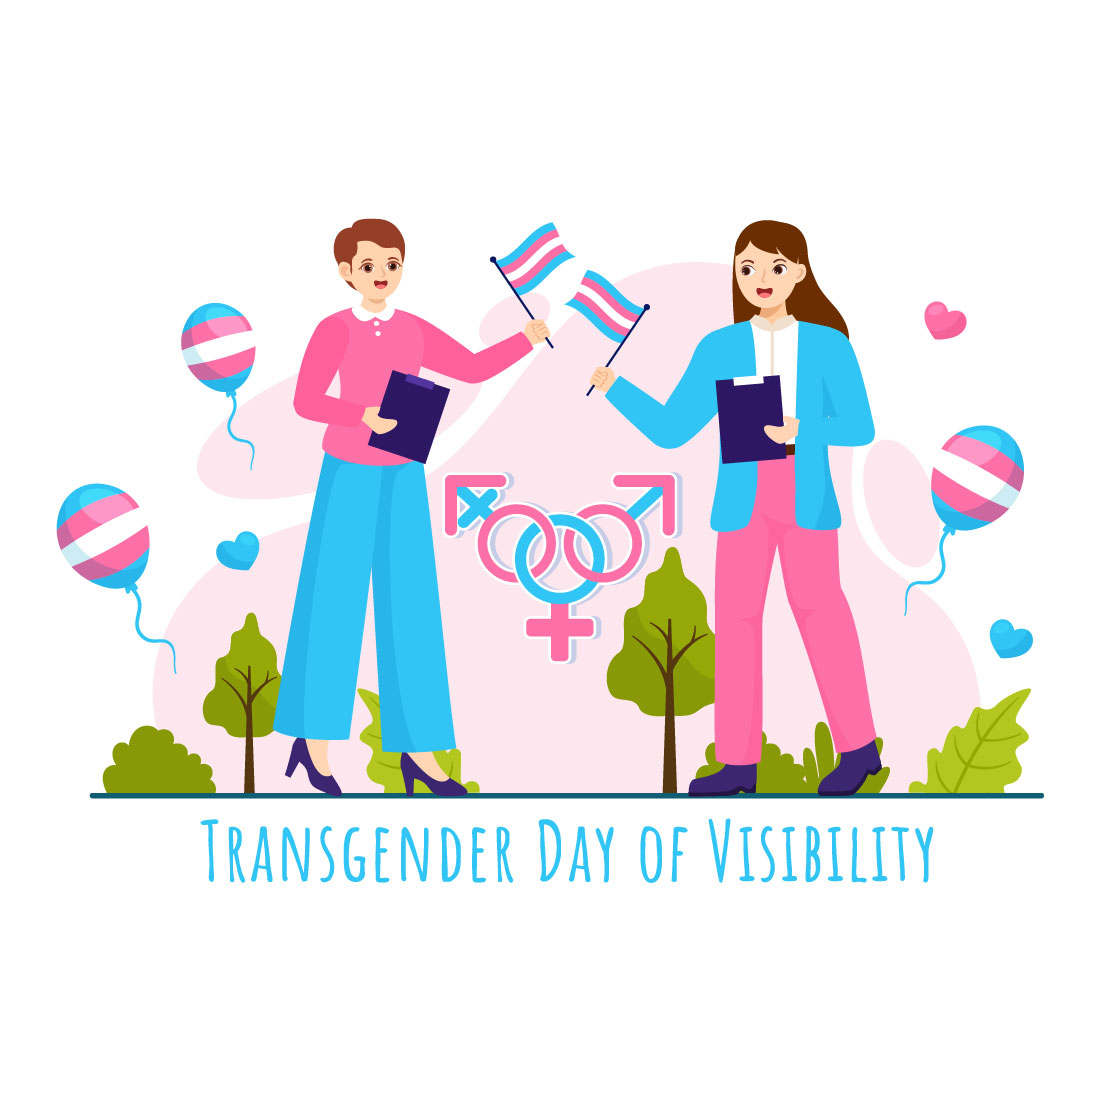 13 International Transgender Day of Visibility Illustration cover image.